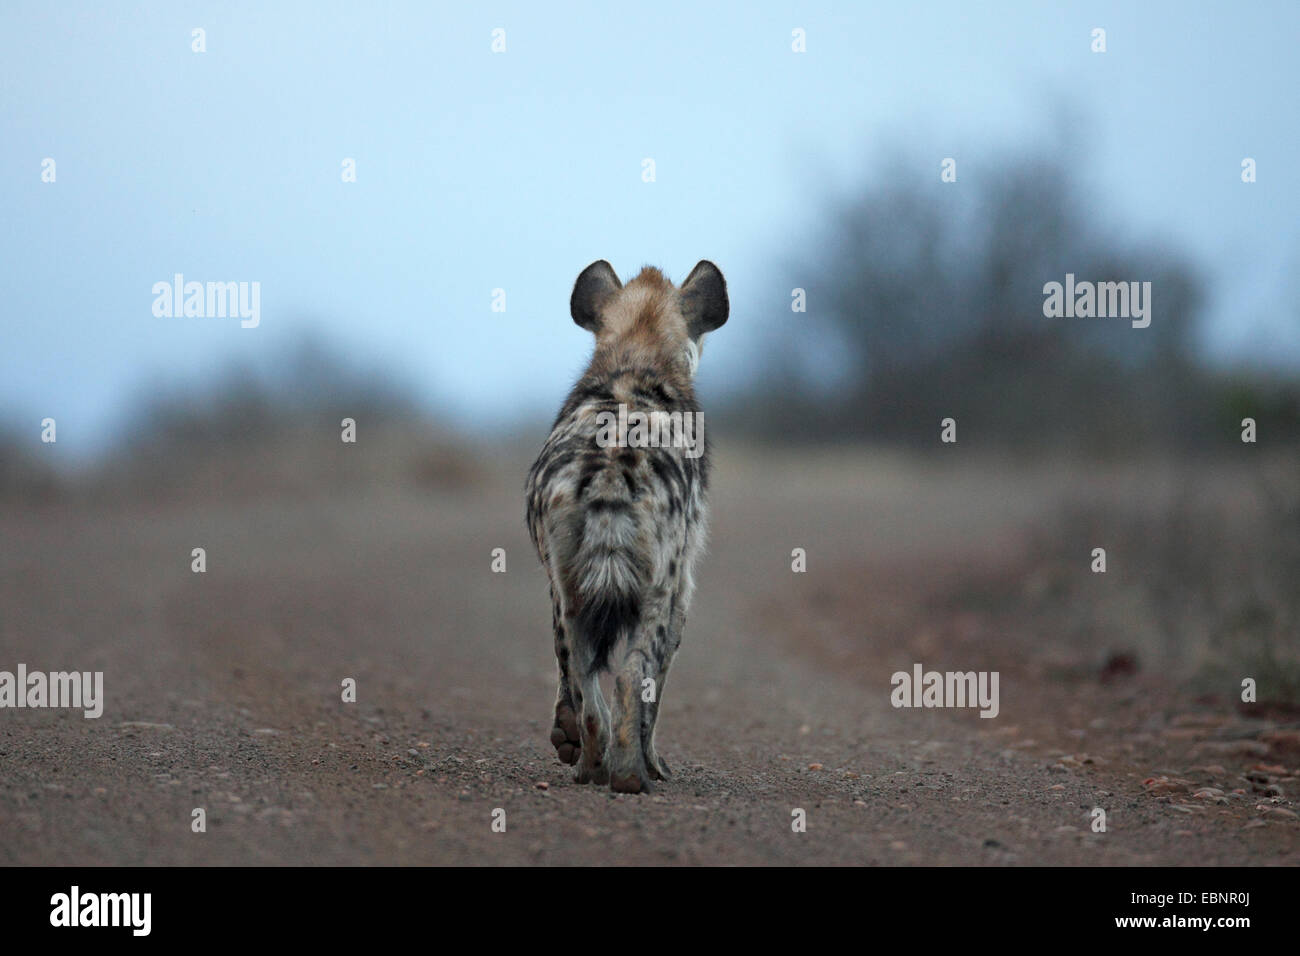 spotted hyena (Crocuta crocuta), walks along a dirt road, back view, South Africa, Kruger National Park Stock Photo